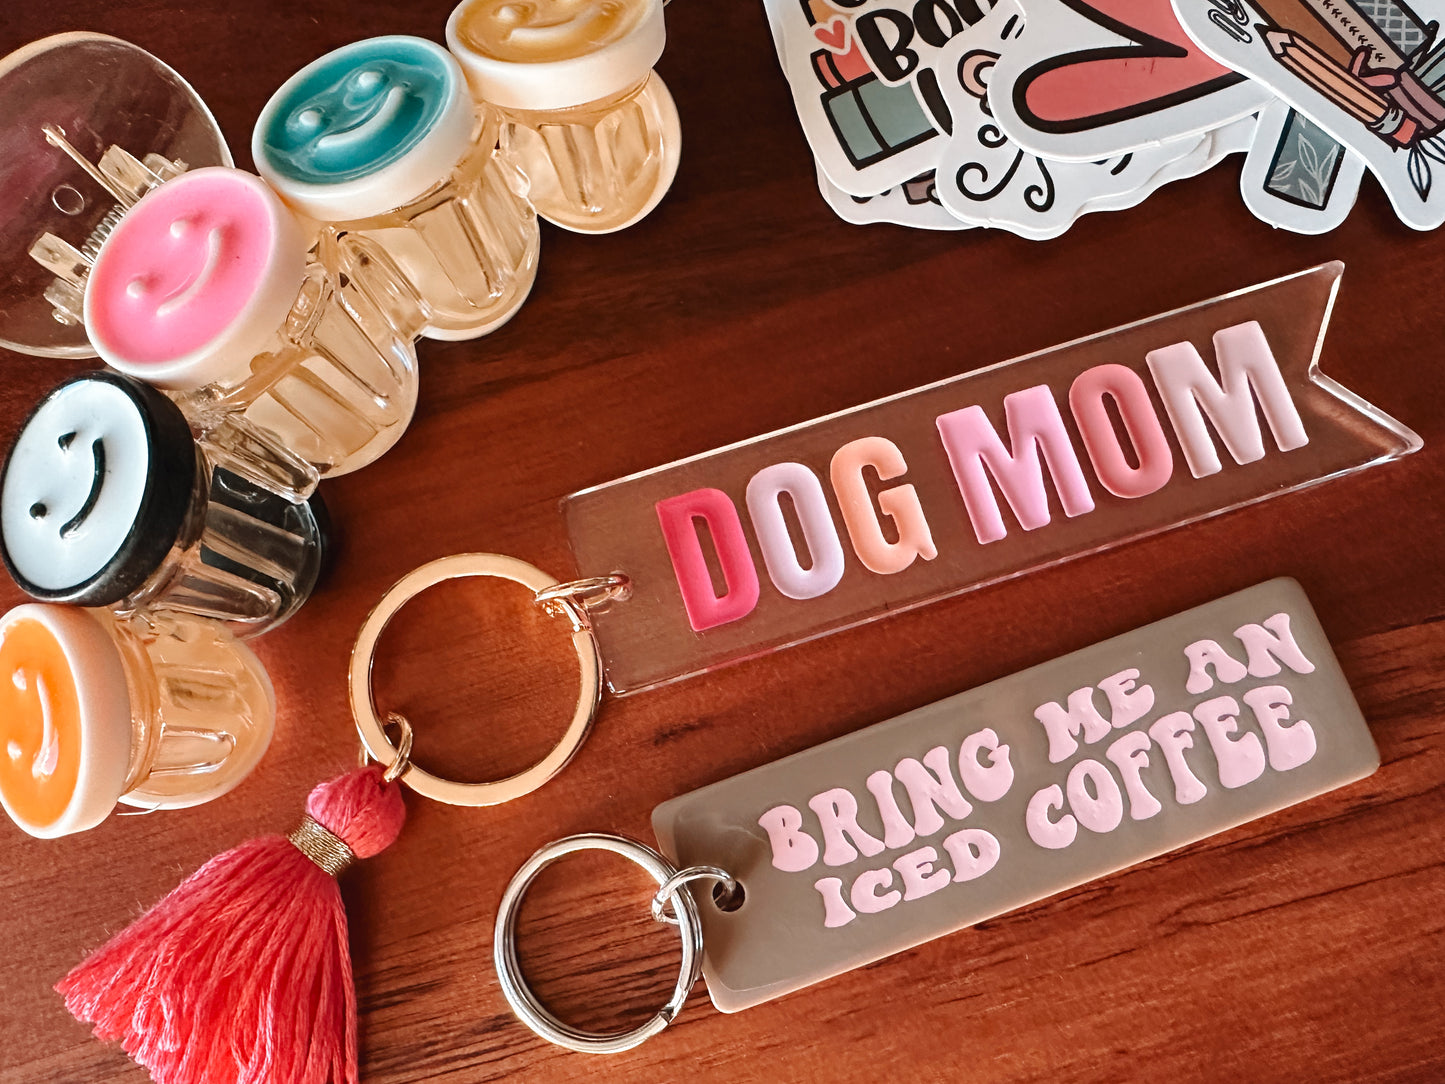 Dog Mom Tassel Keychain